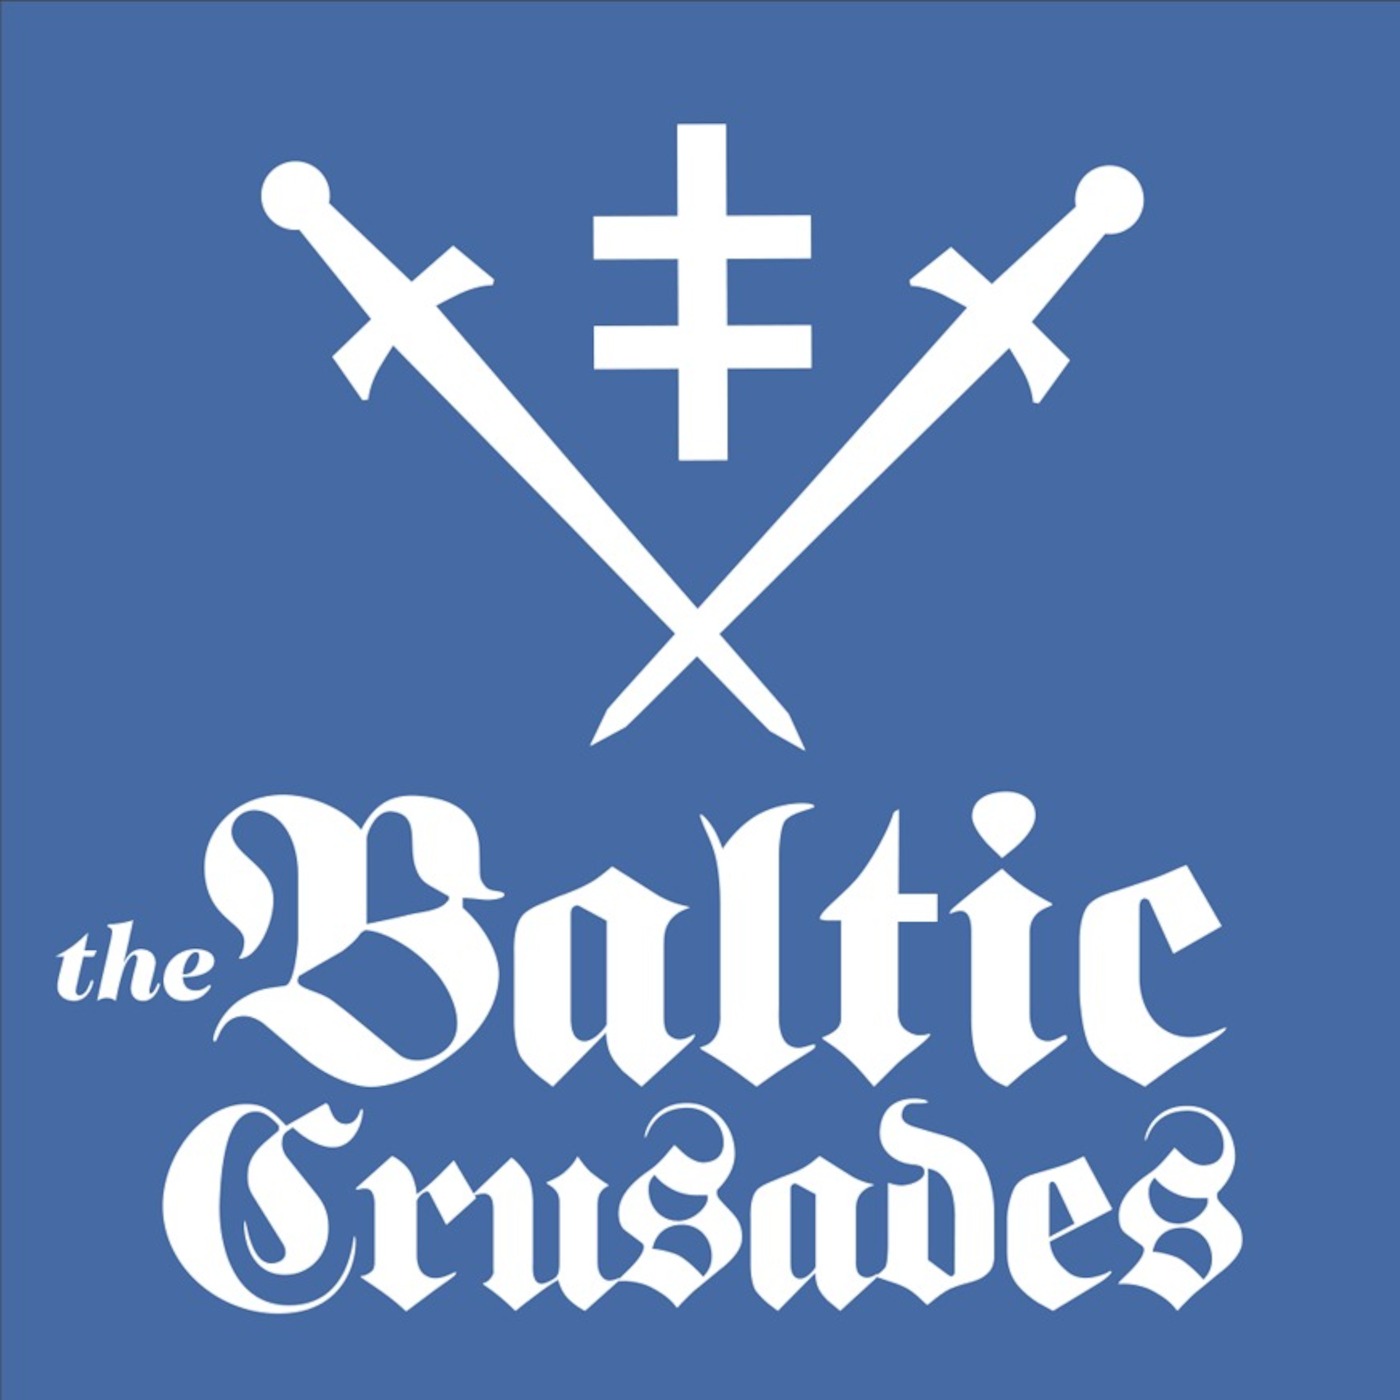 Episode 232 - The Baltic Crusades